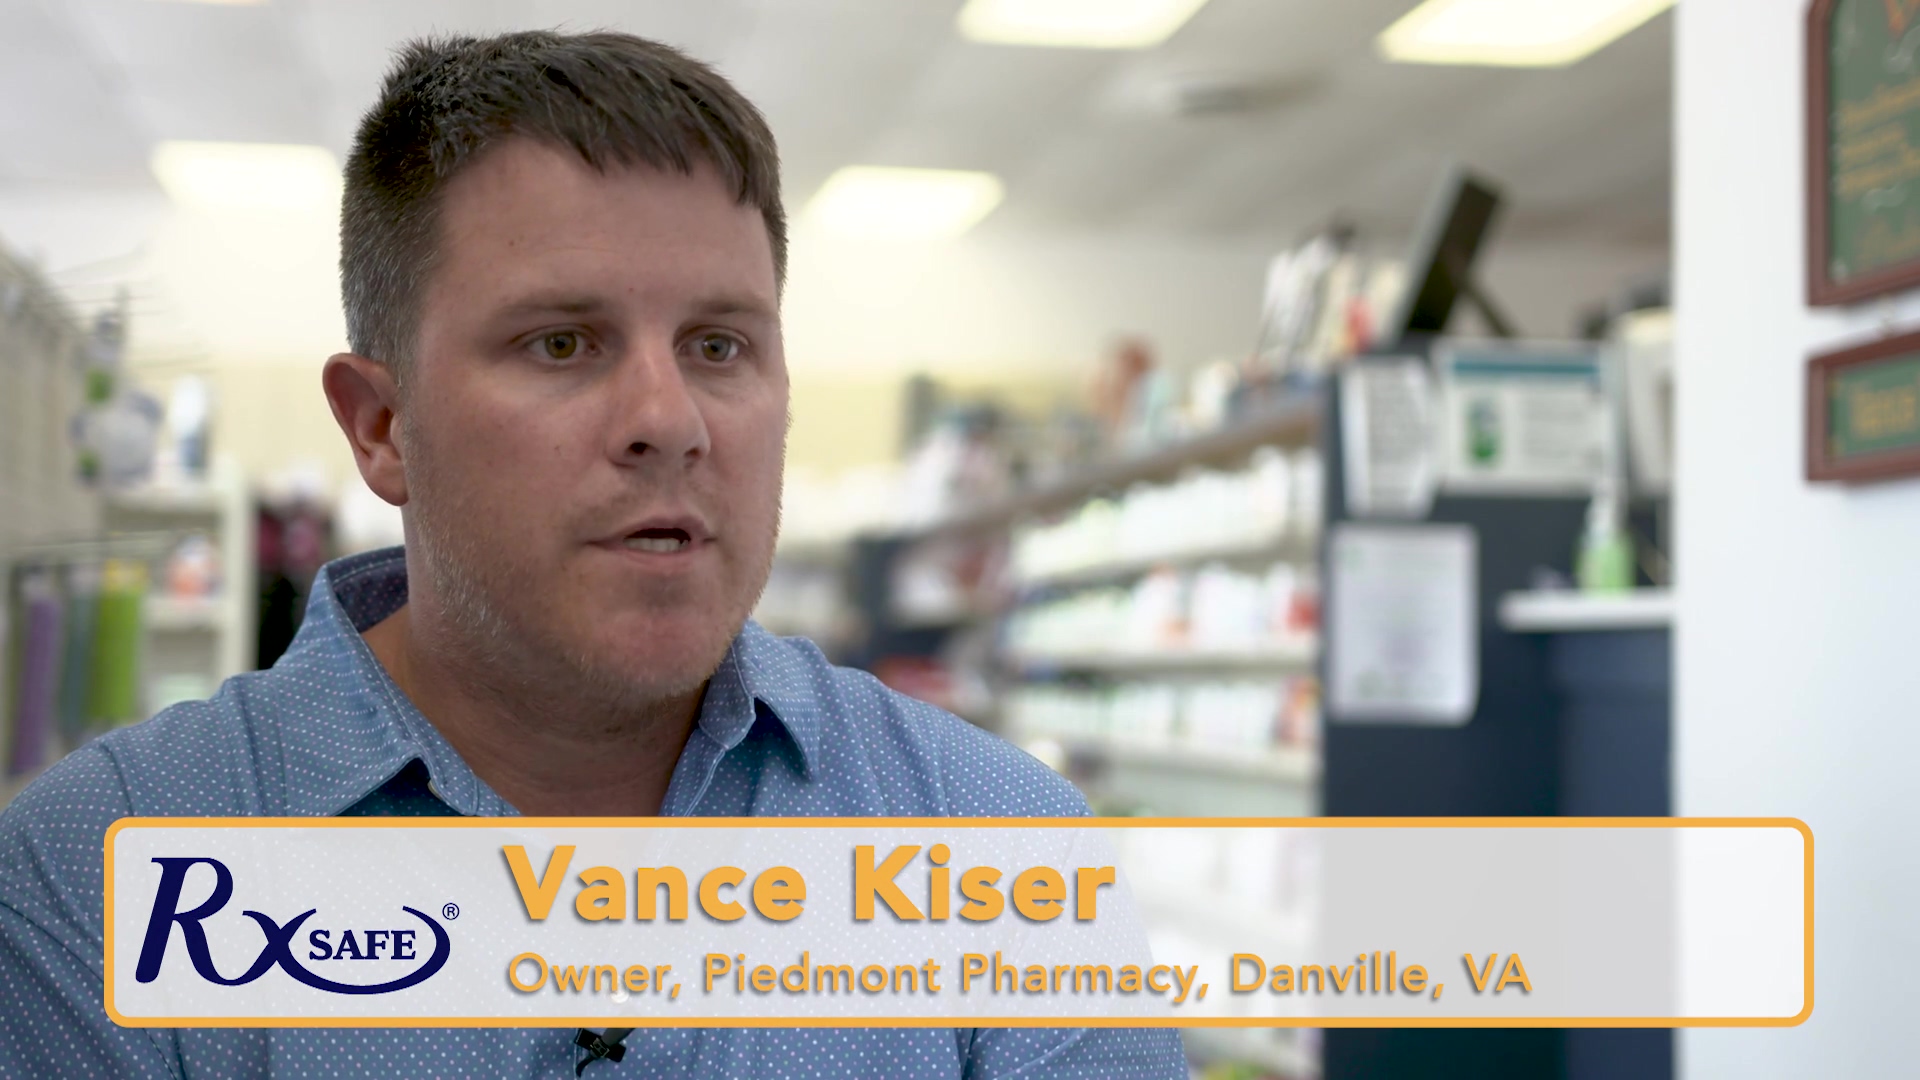 Piedmont Pharmacy Danville VA 2 CAM EDIT 3